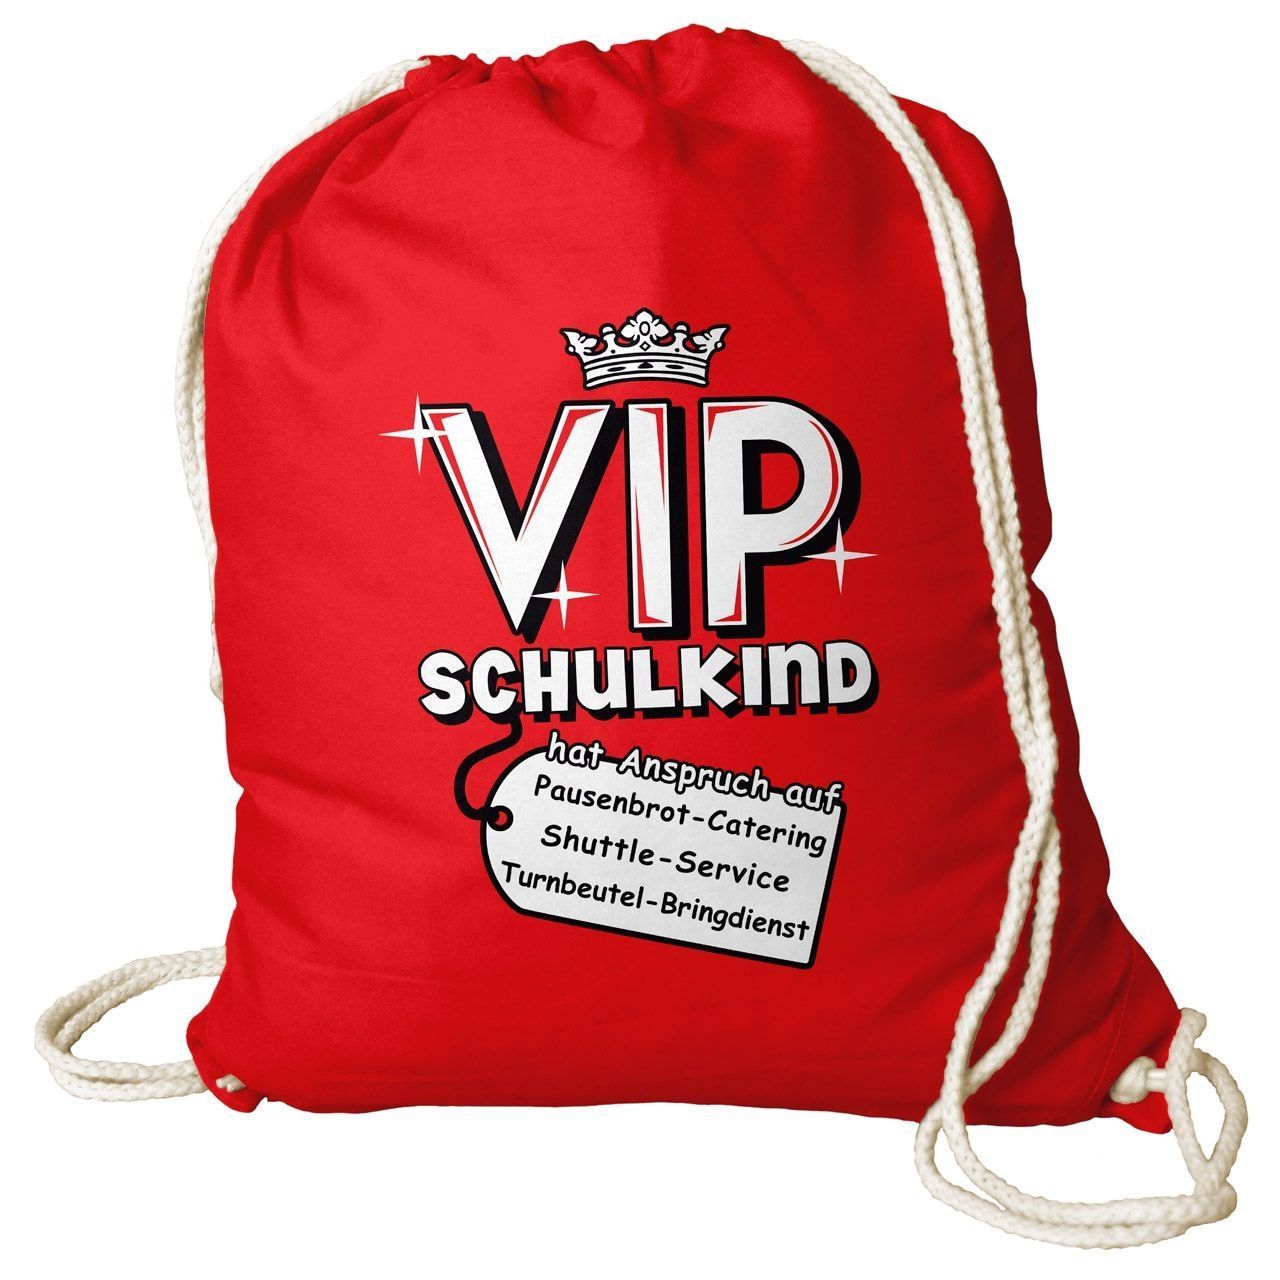 VIP Schulkind Rucksack Beutel rot